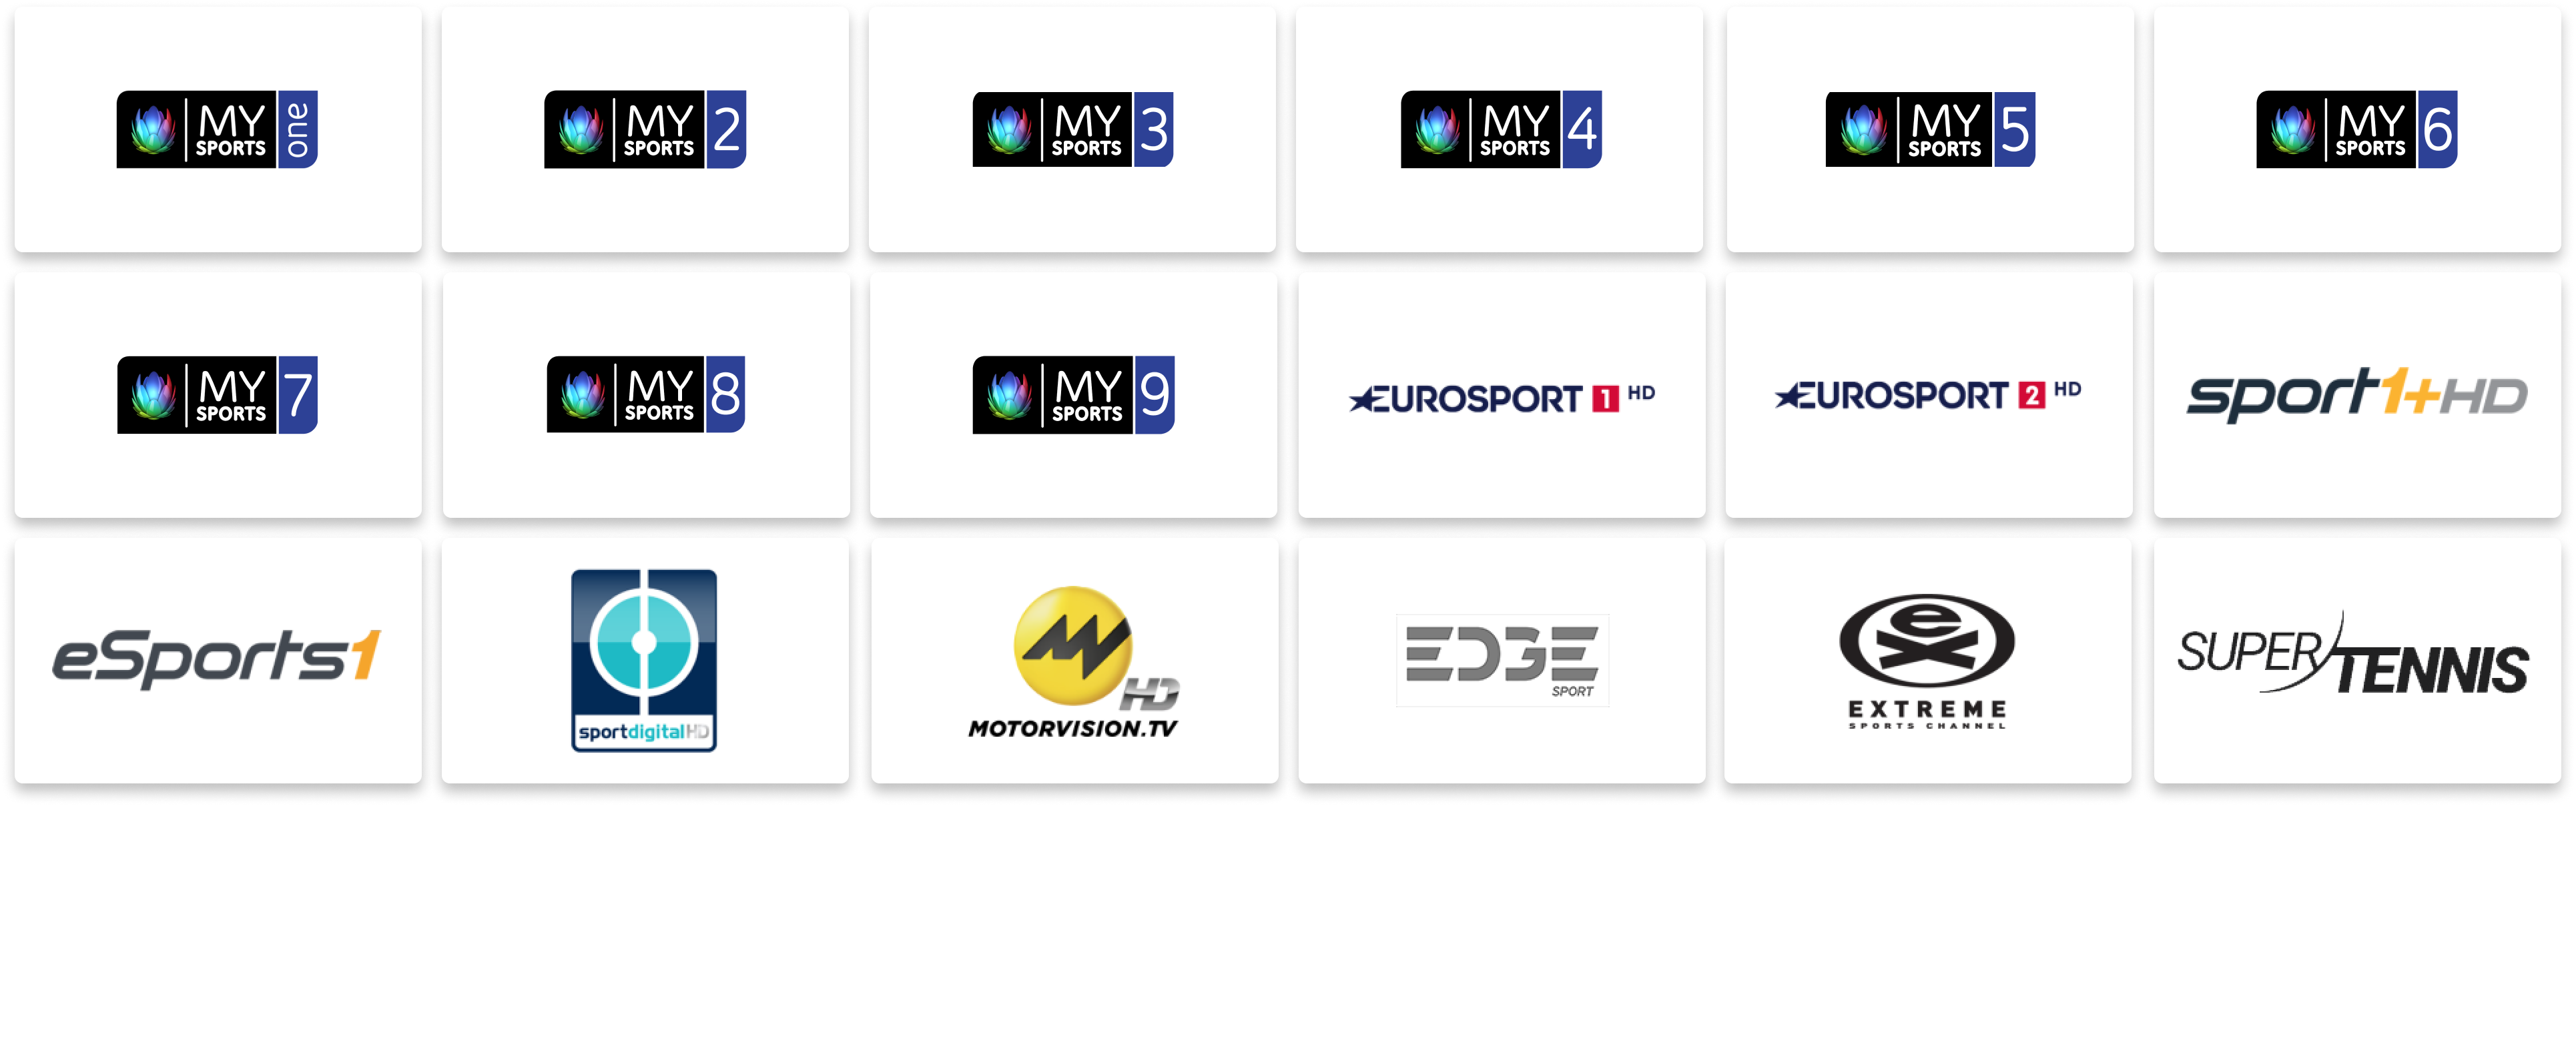 Mysports-channels-DE